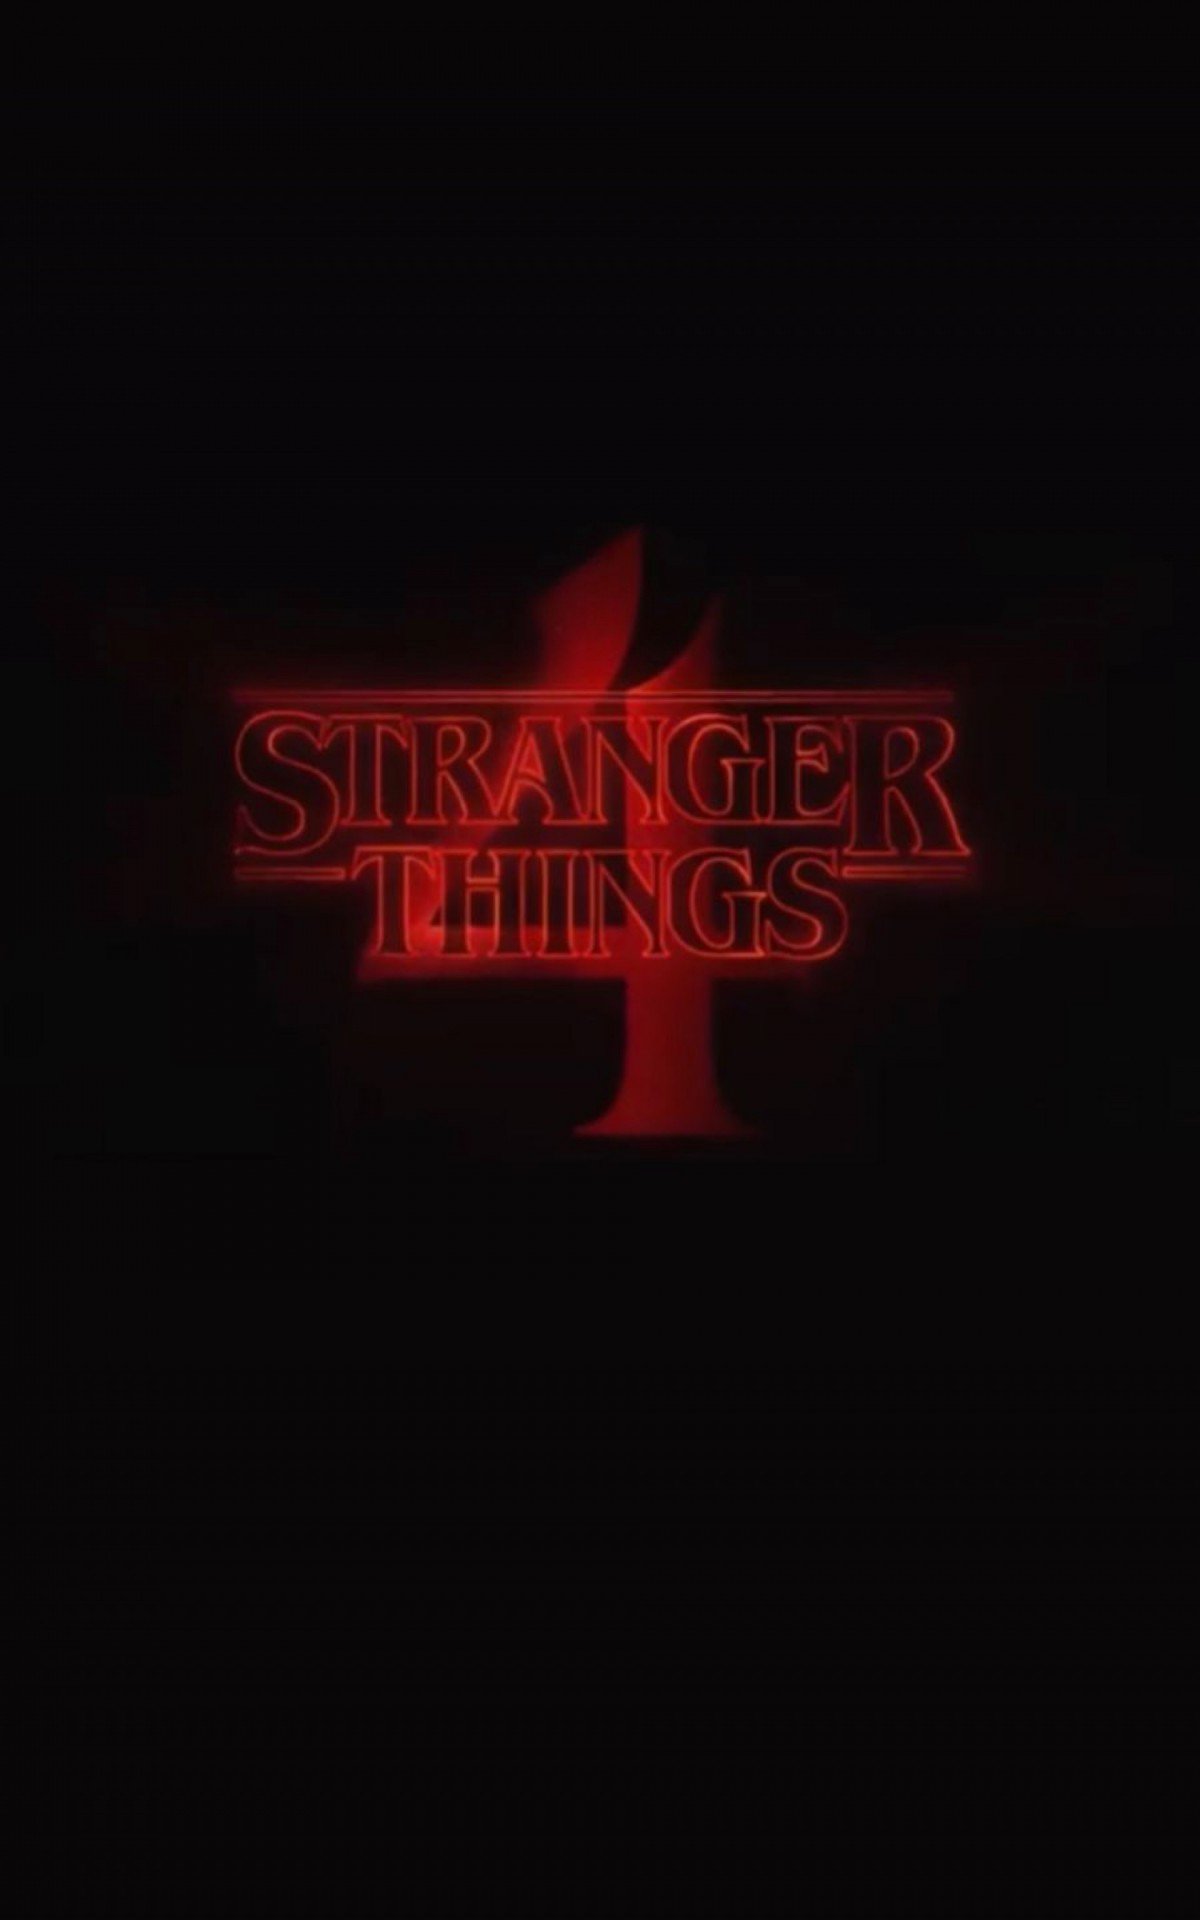 Stranger Things: Netflix divulga trailer da 4ª temporada; assista